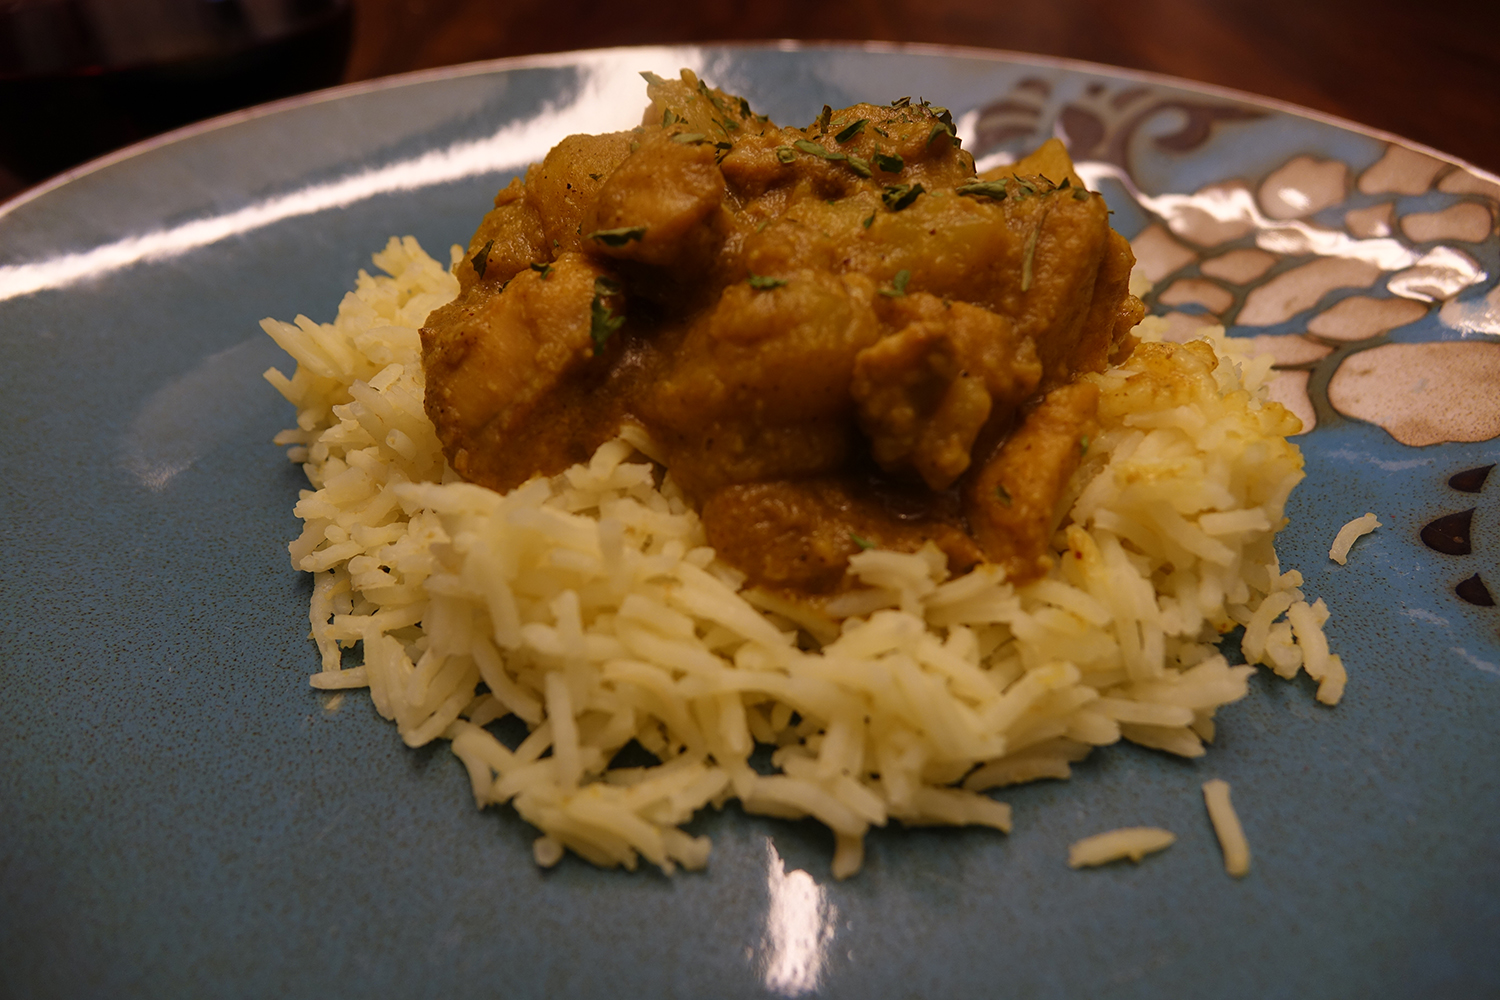 Curry Chicken final dish